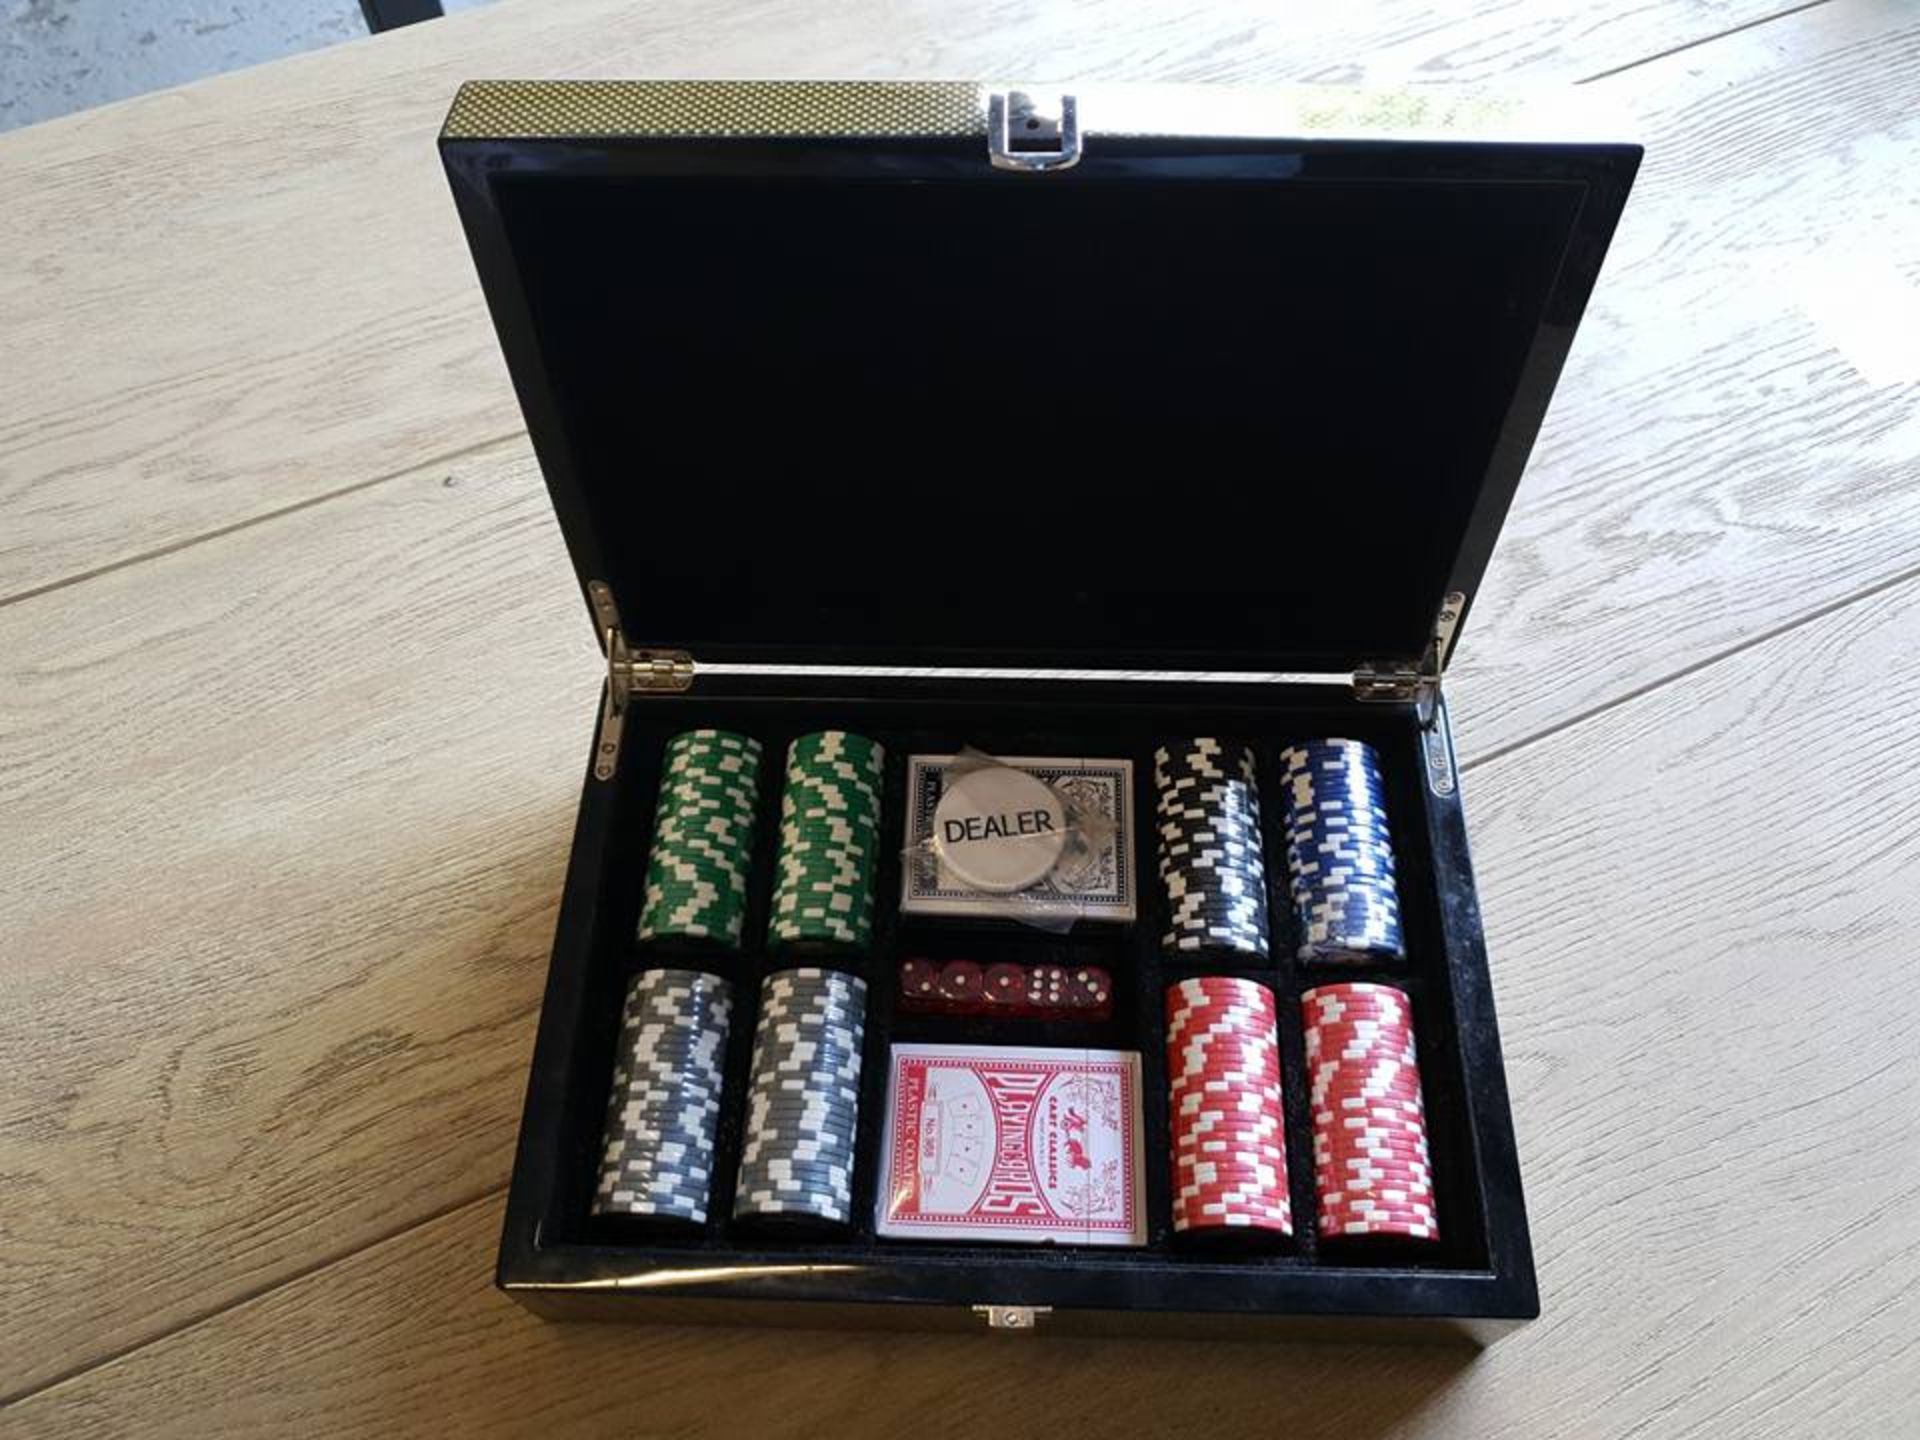 Las Vegas Executive Poker set in presentation case